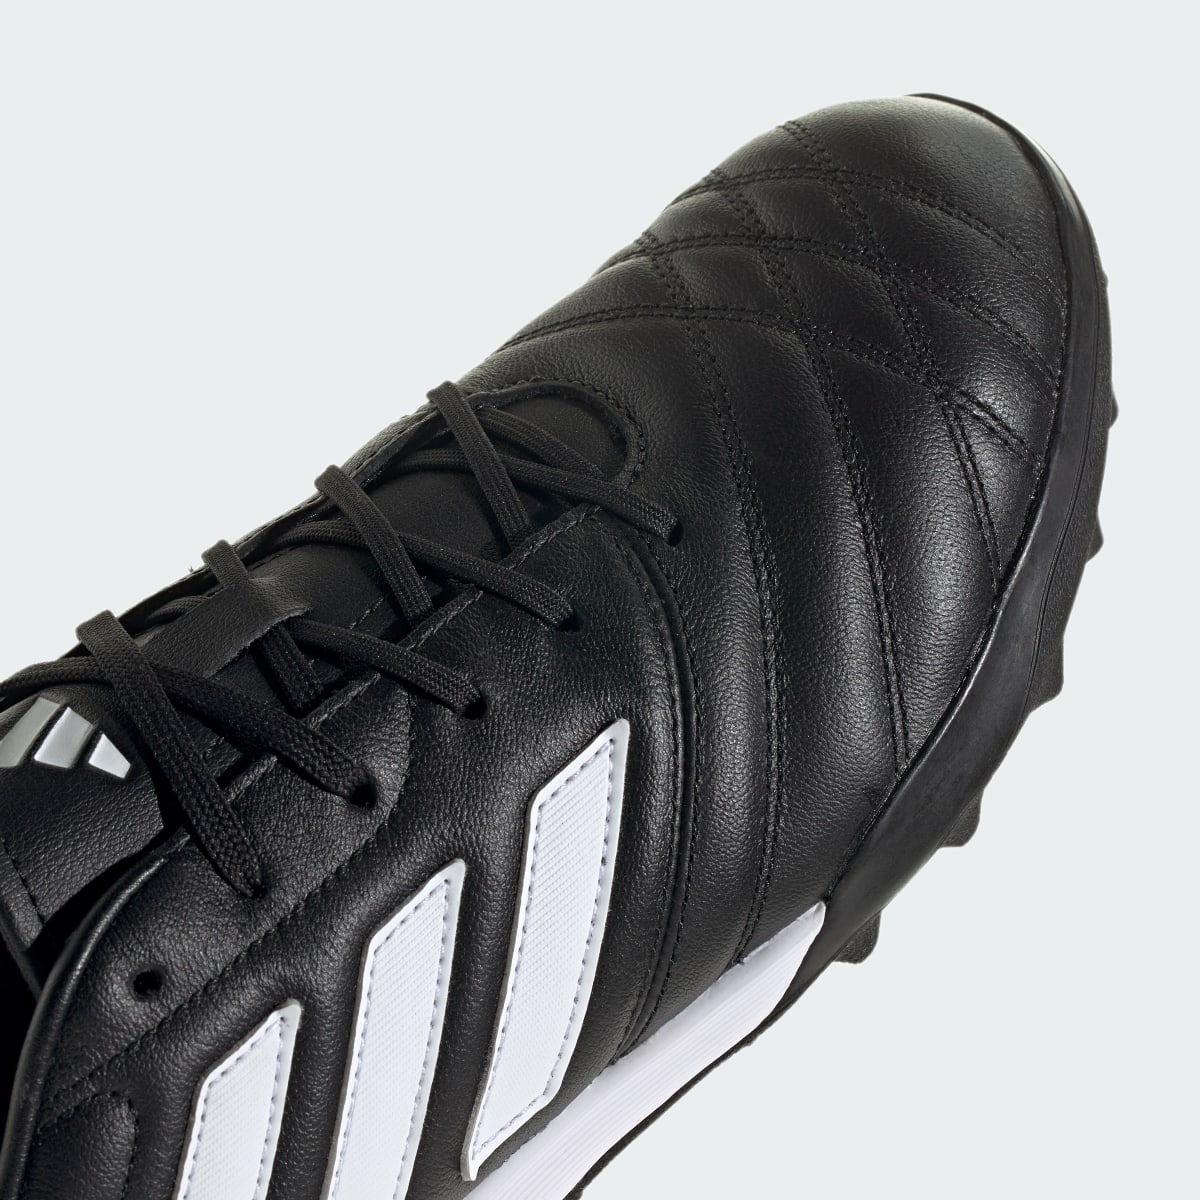 Adidas Botas de Futebol Copa Gloro – Piso sintético. 10